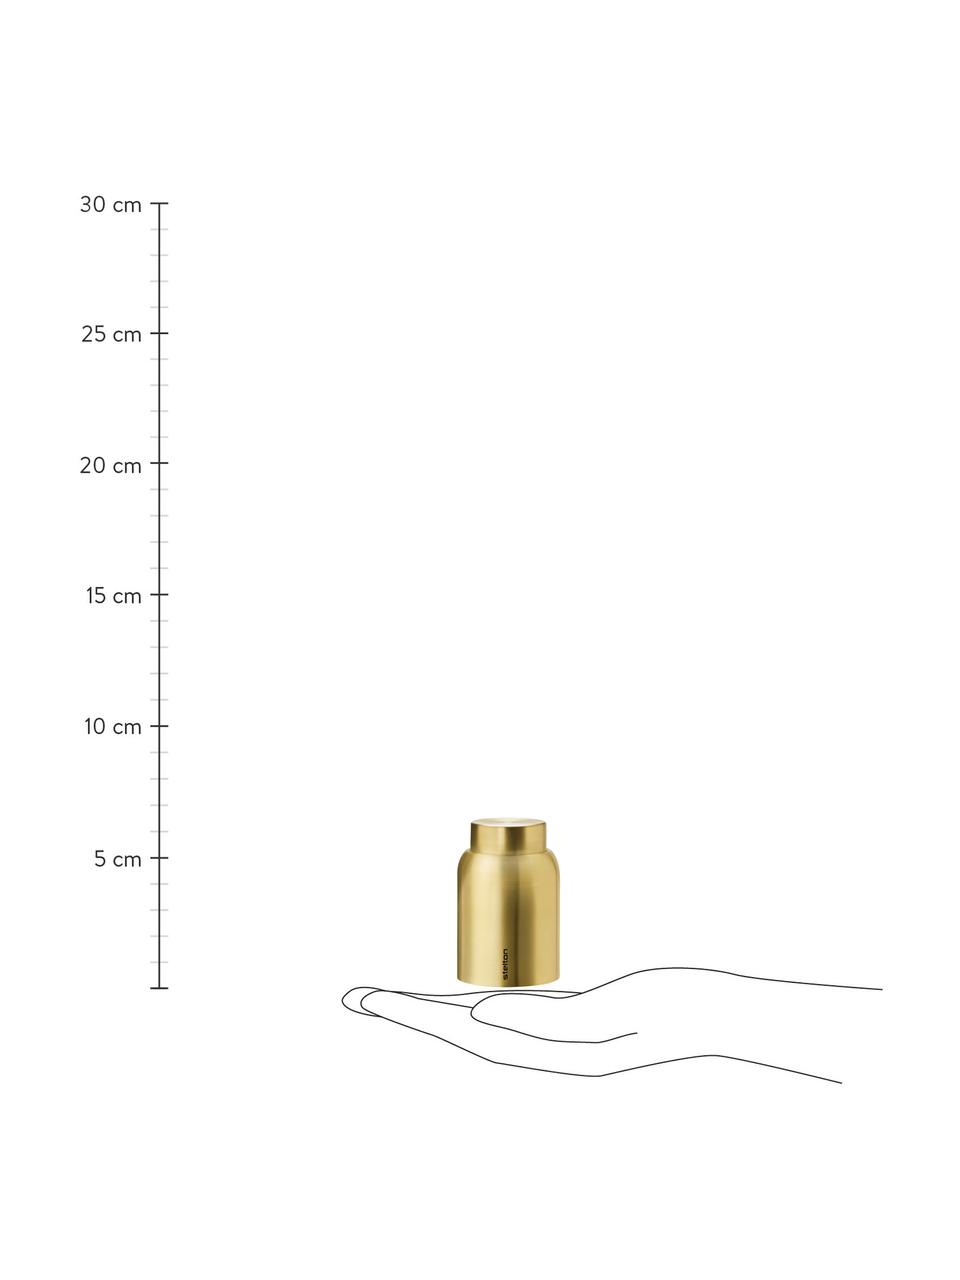 Vacuüm flessendop Collar, Vermessingd edelstaal, Messingkleurig, Ø 4 x H 6 cm